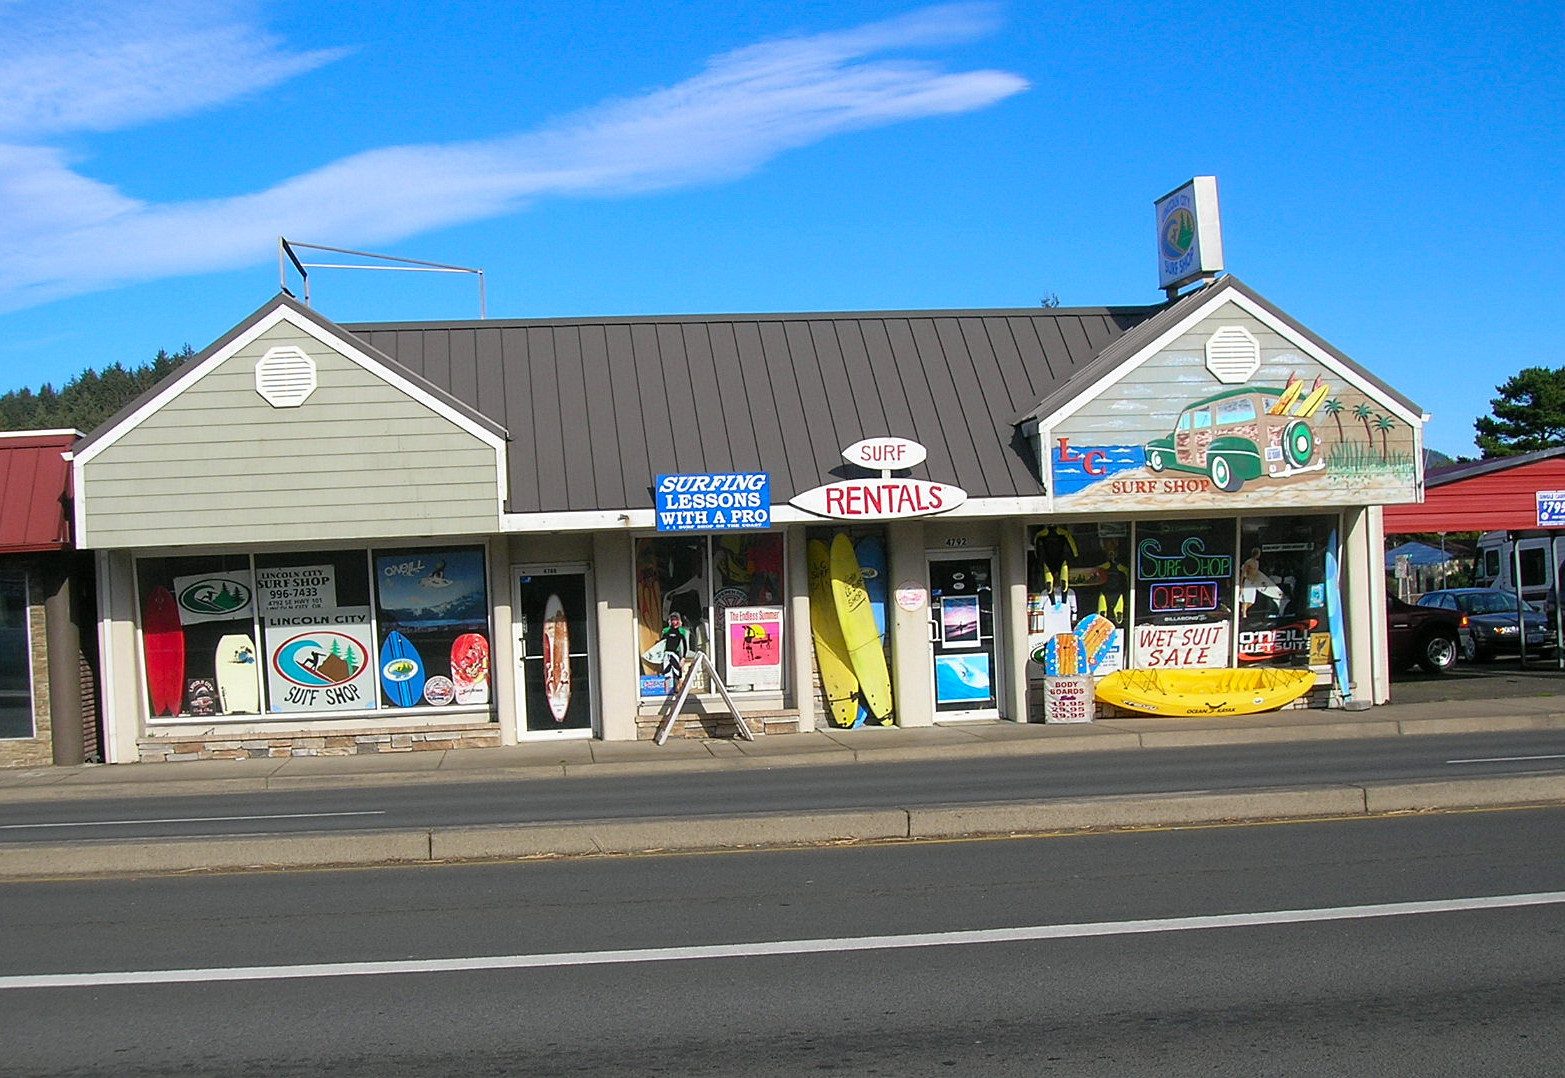  Lincoln City Surf Shop